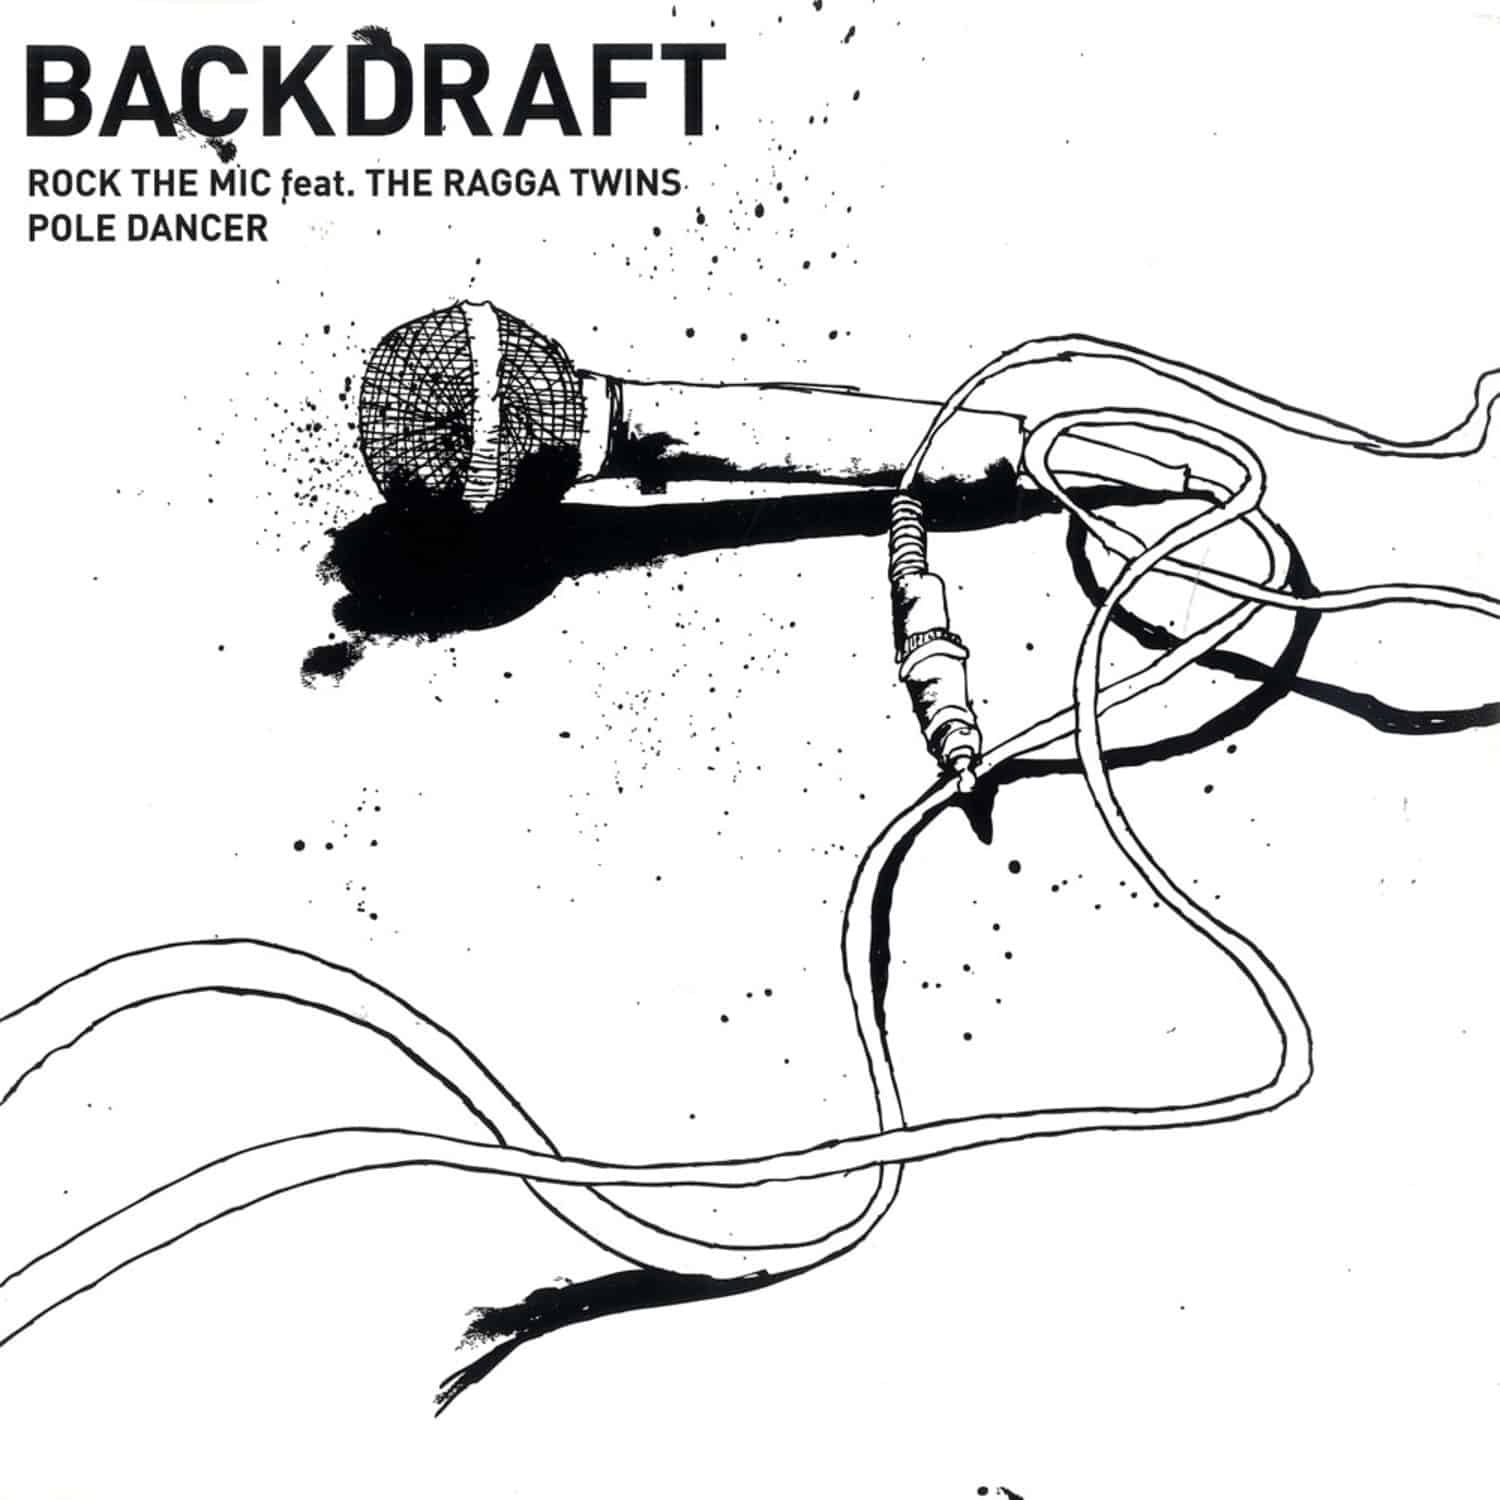 Backdraft - ROCK THE MIC / POLE DANCER